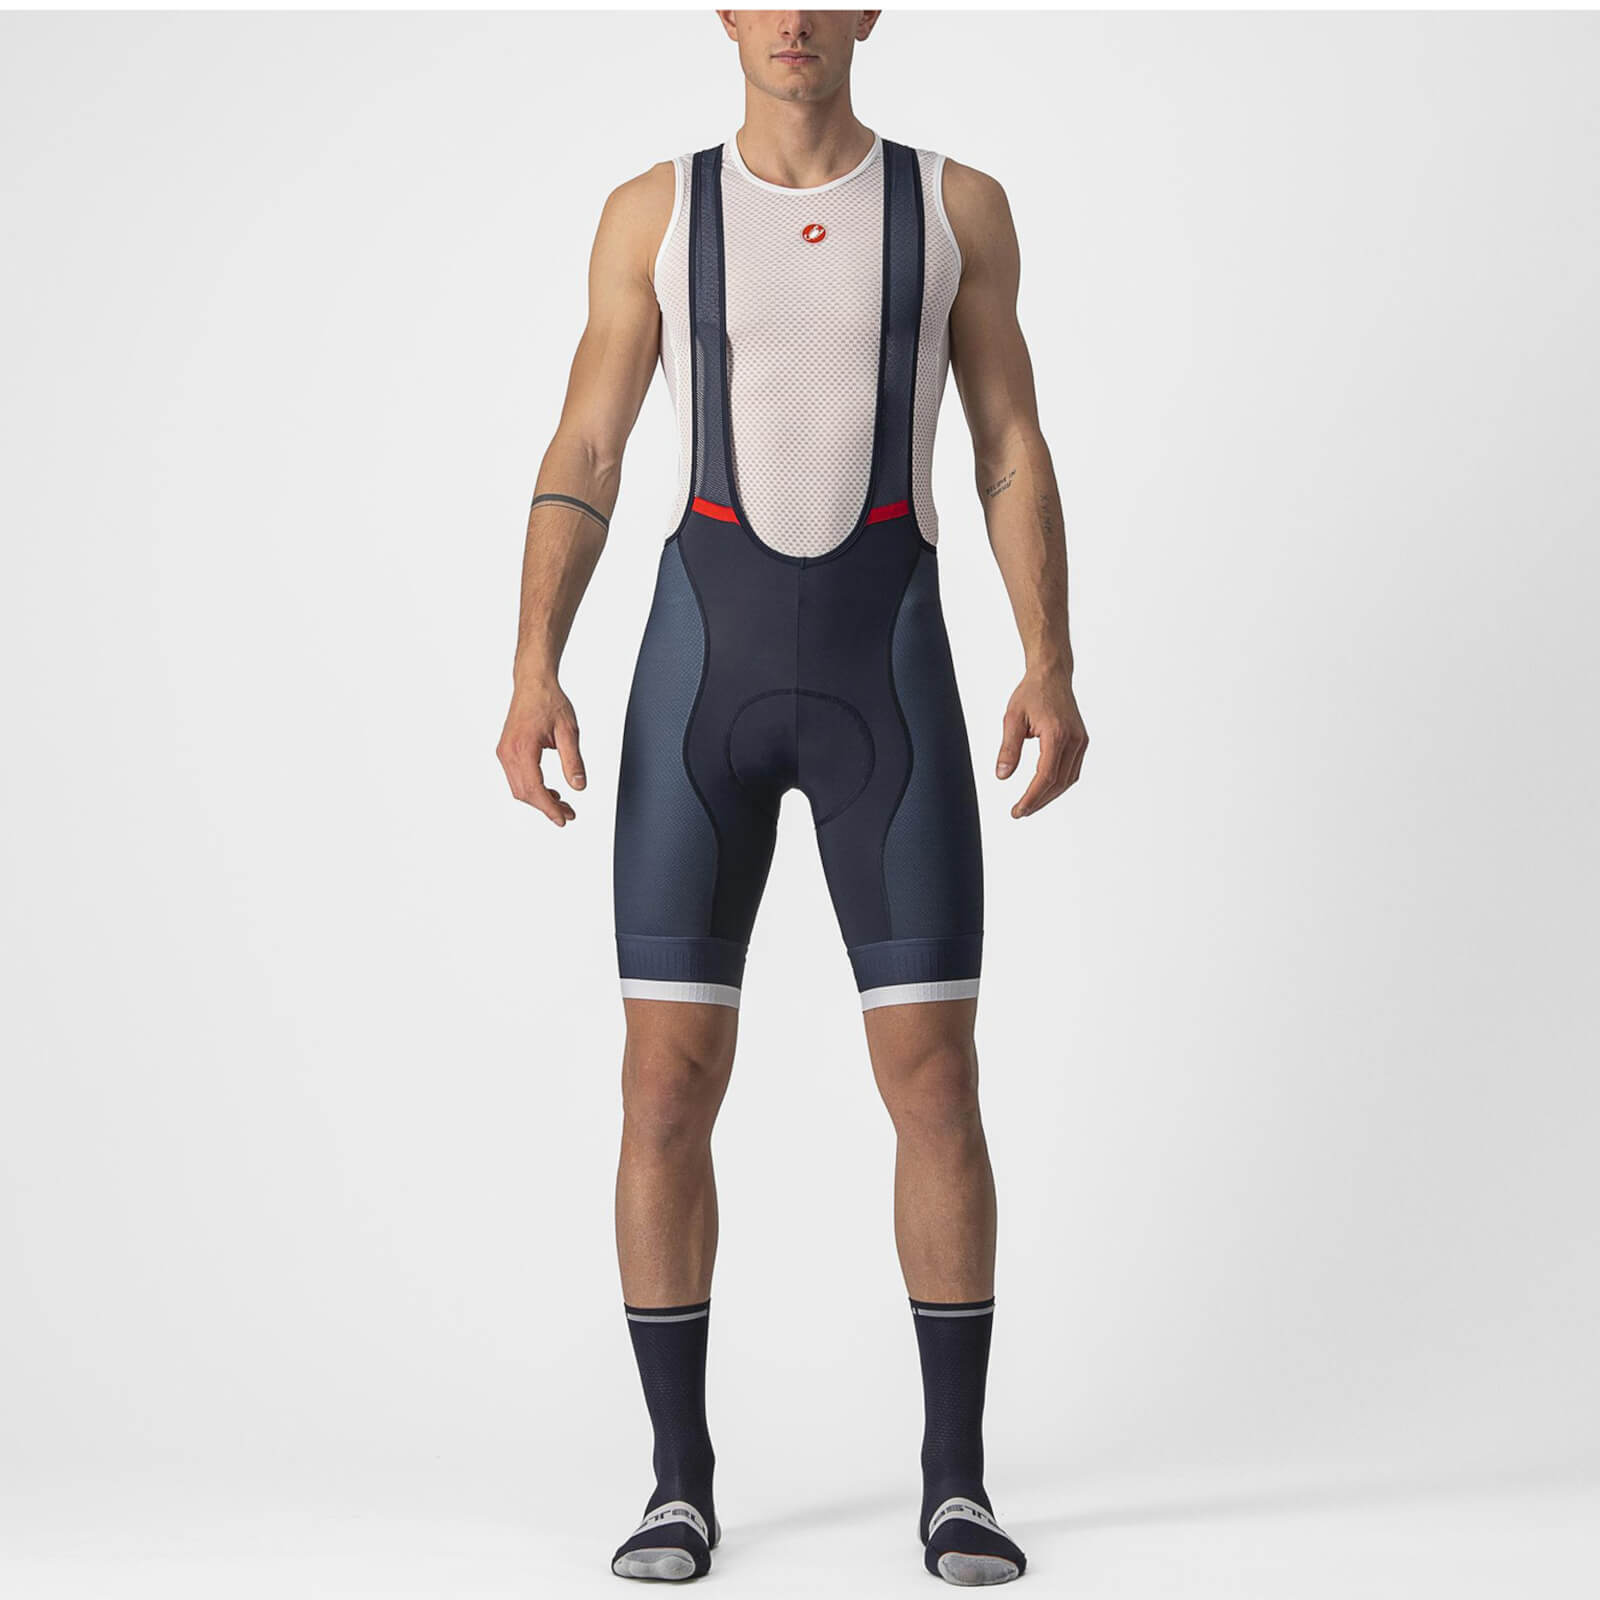 Castelli Competizione Kit Bib Shorts - M - Savile Blue/Silver Gray